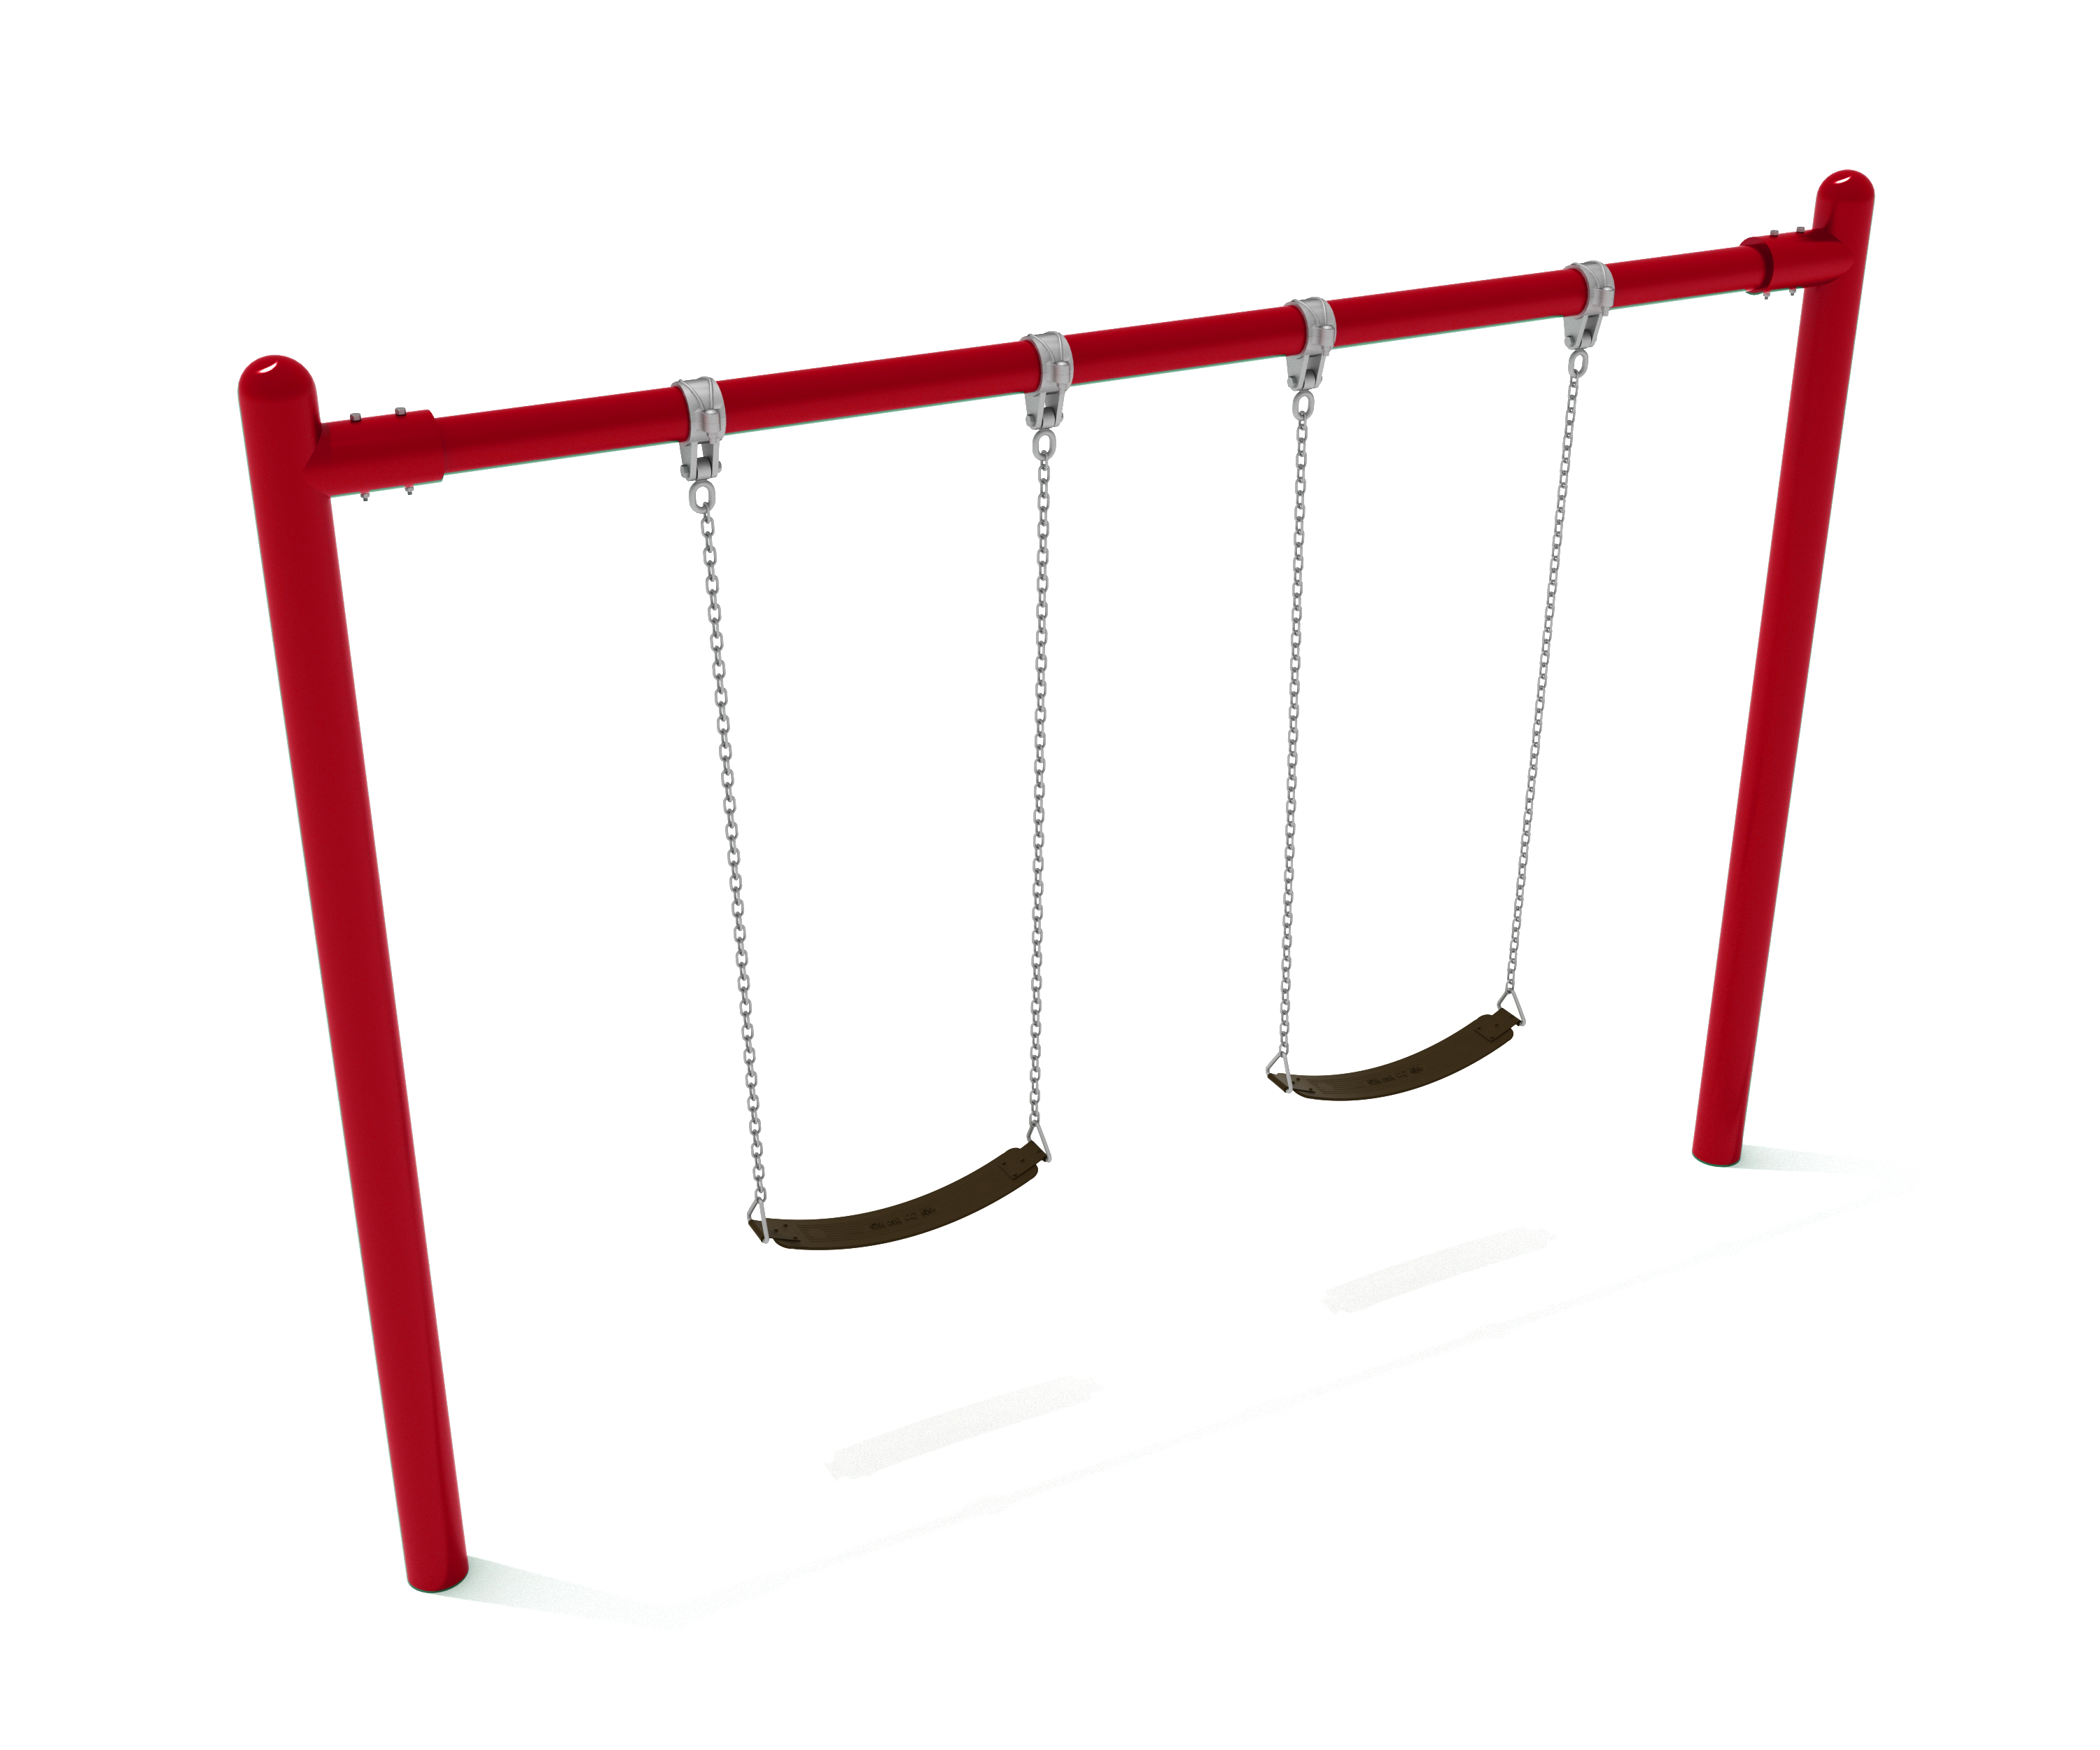 Single Post Swing Set